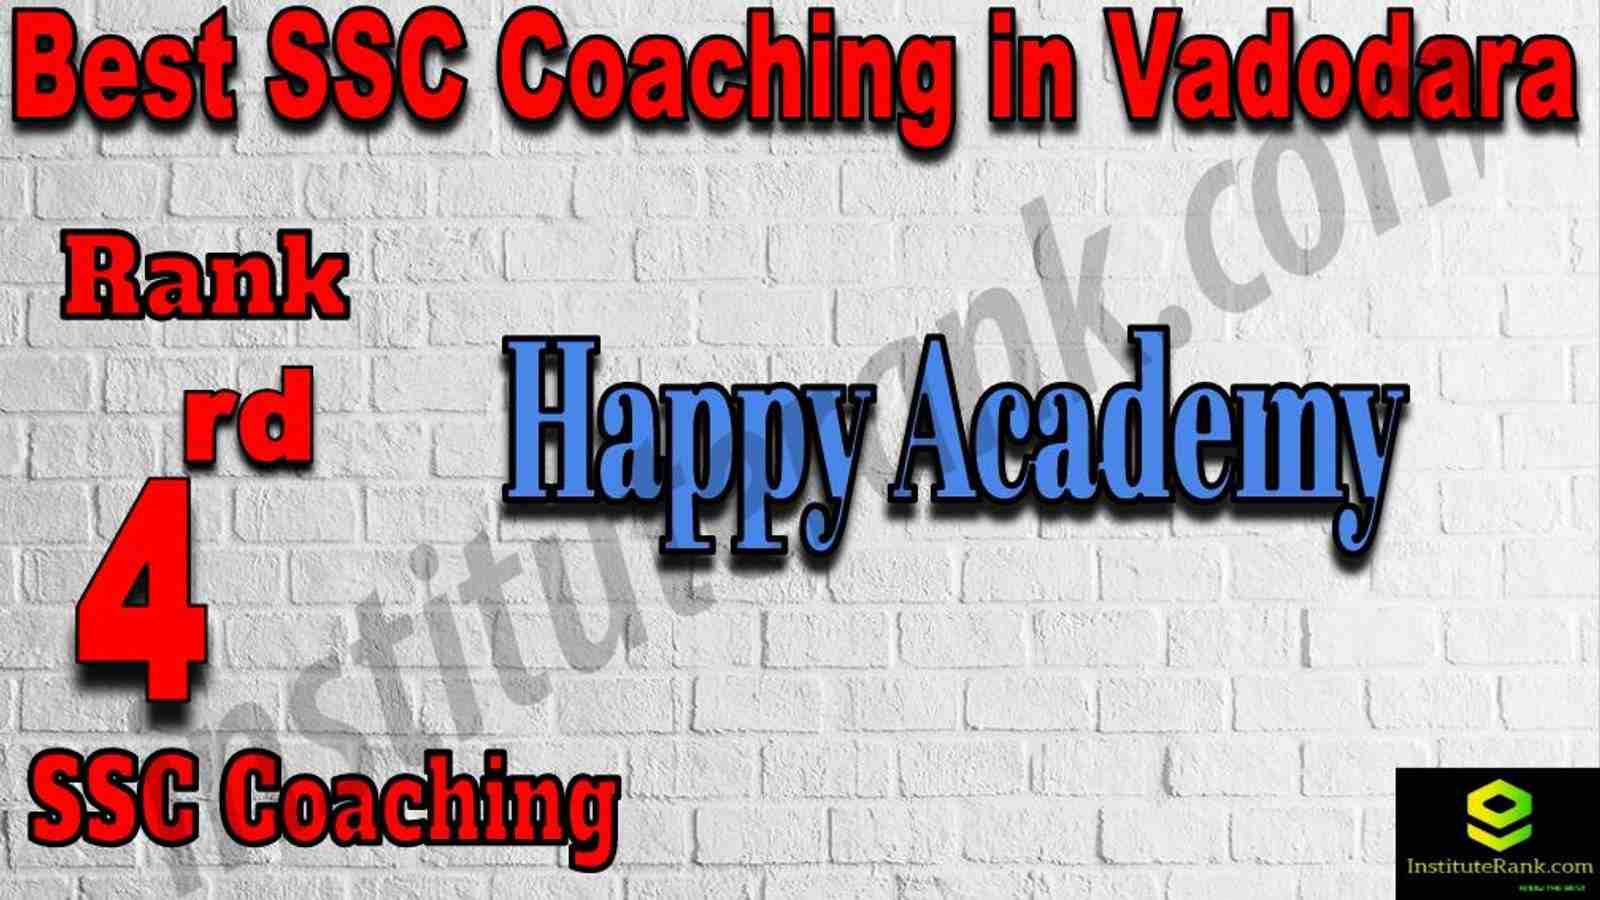 4th Best SSC Coaching in Vadodara